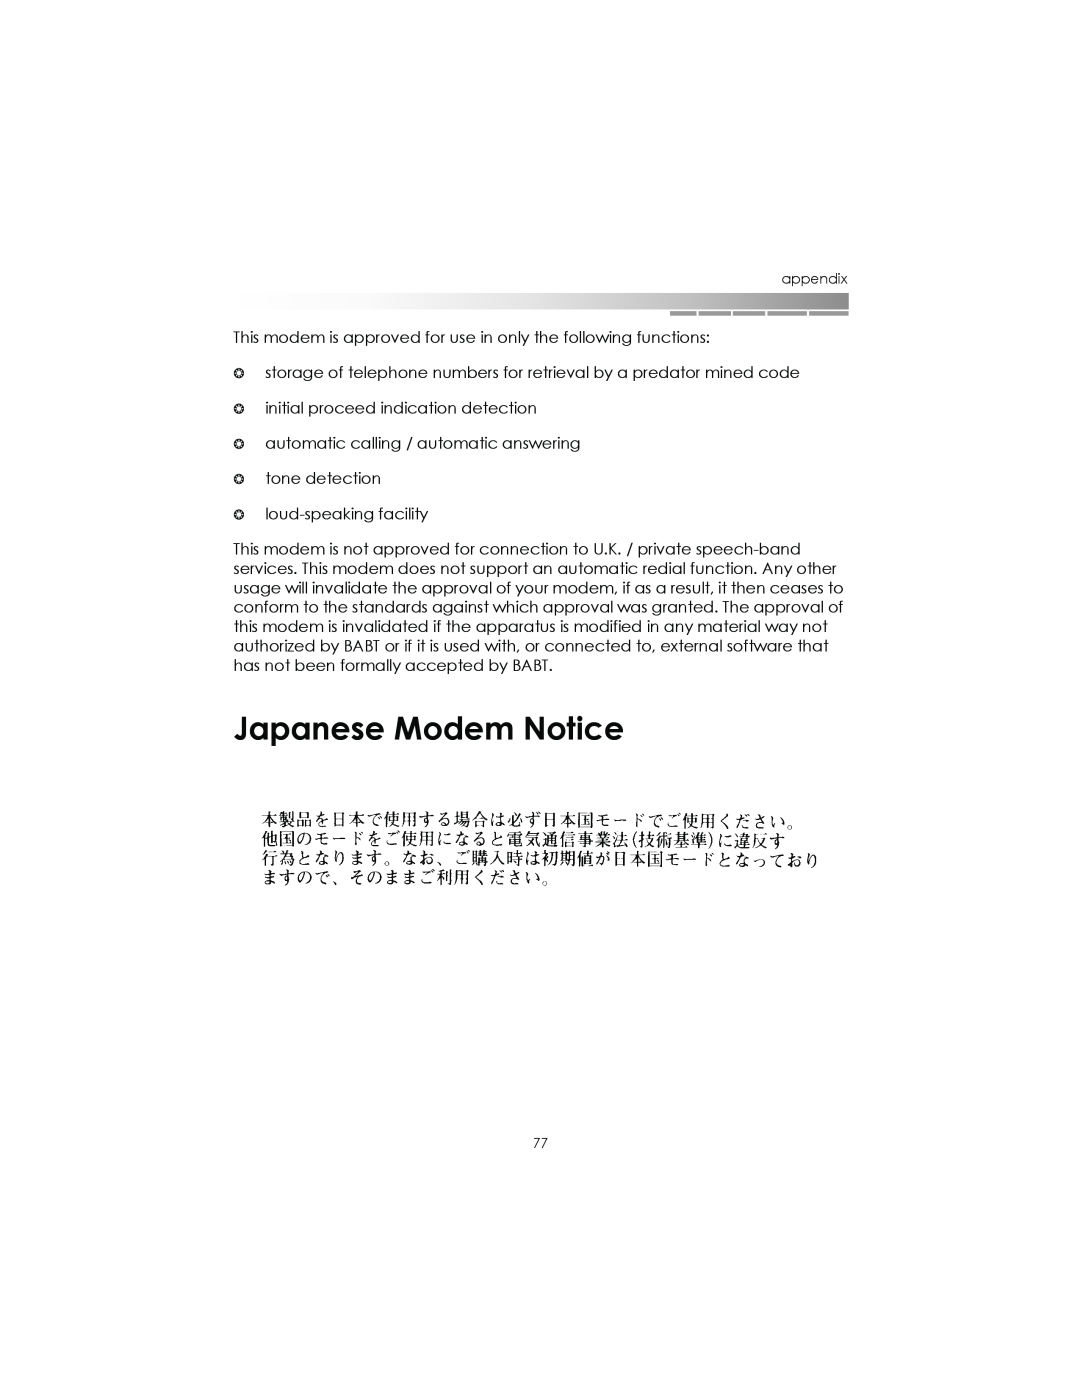 eMachines AAFW53700001K0 manual Japanese Modem Notice 